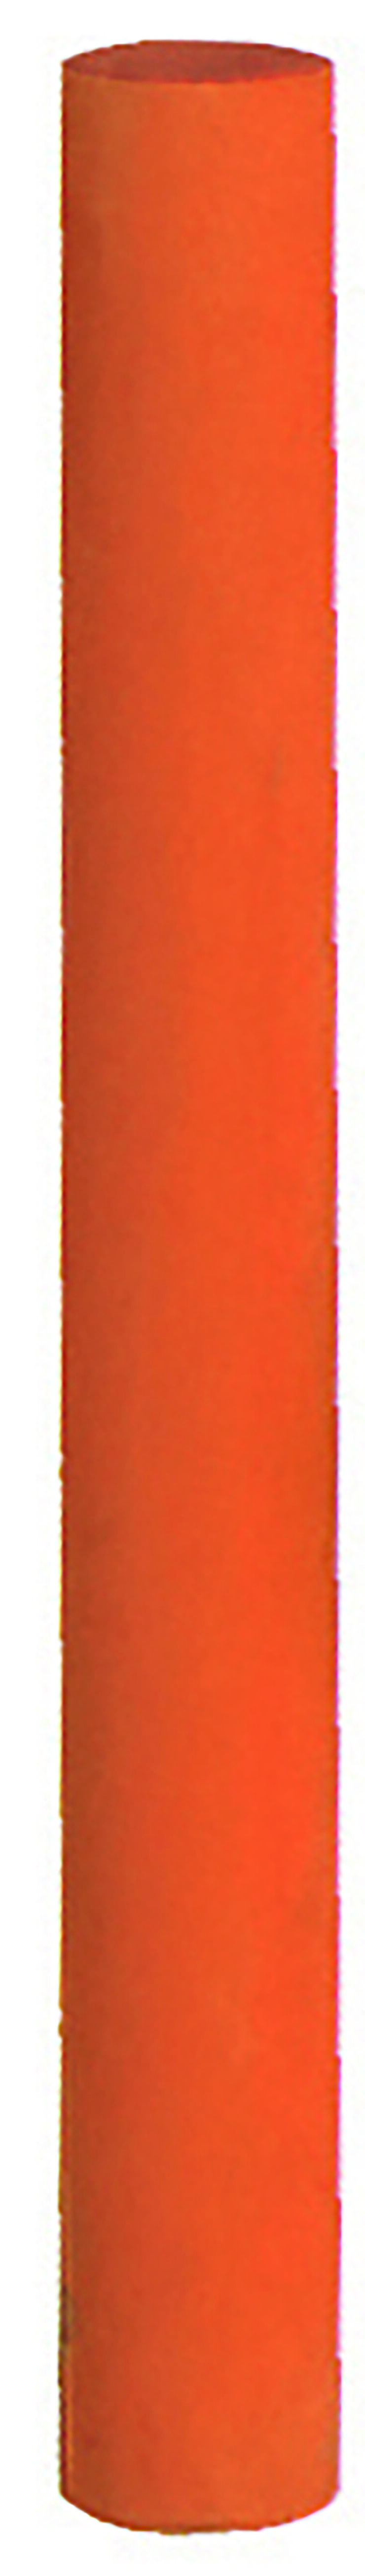 Tiza antipolvo Giotto Robercolor colores 10u